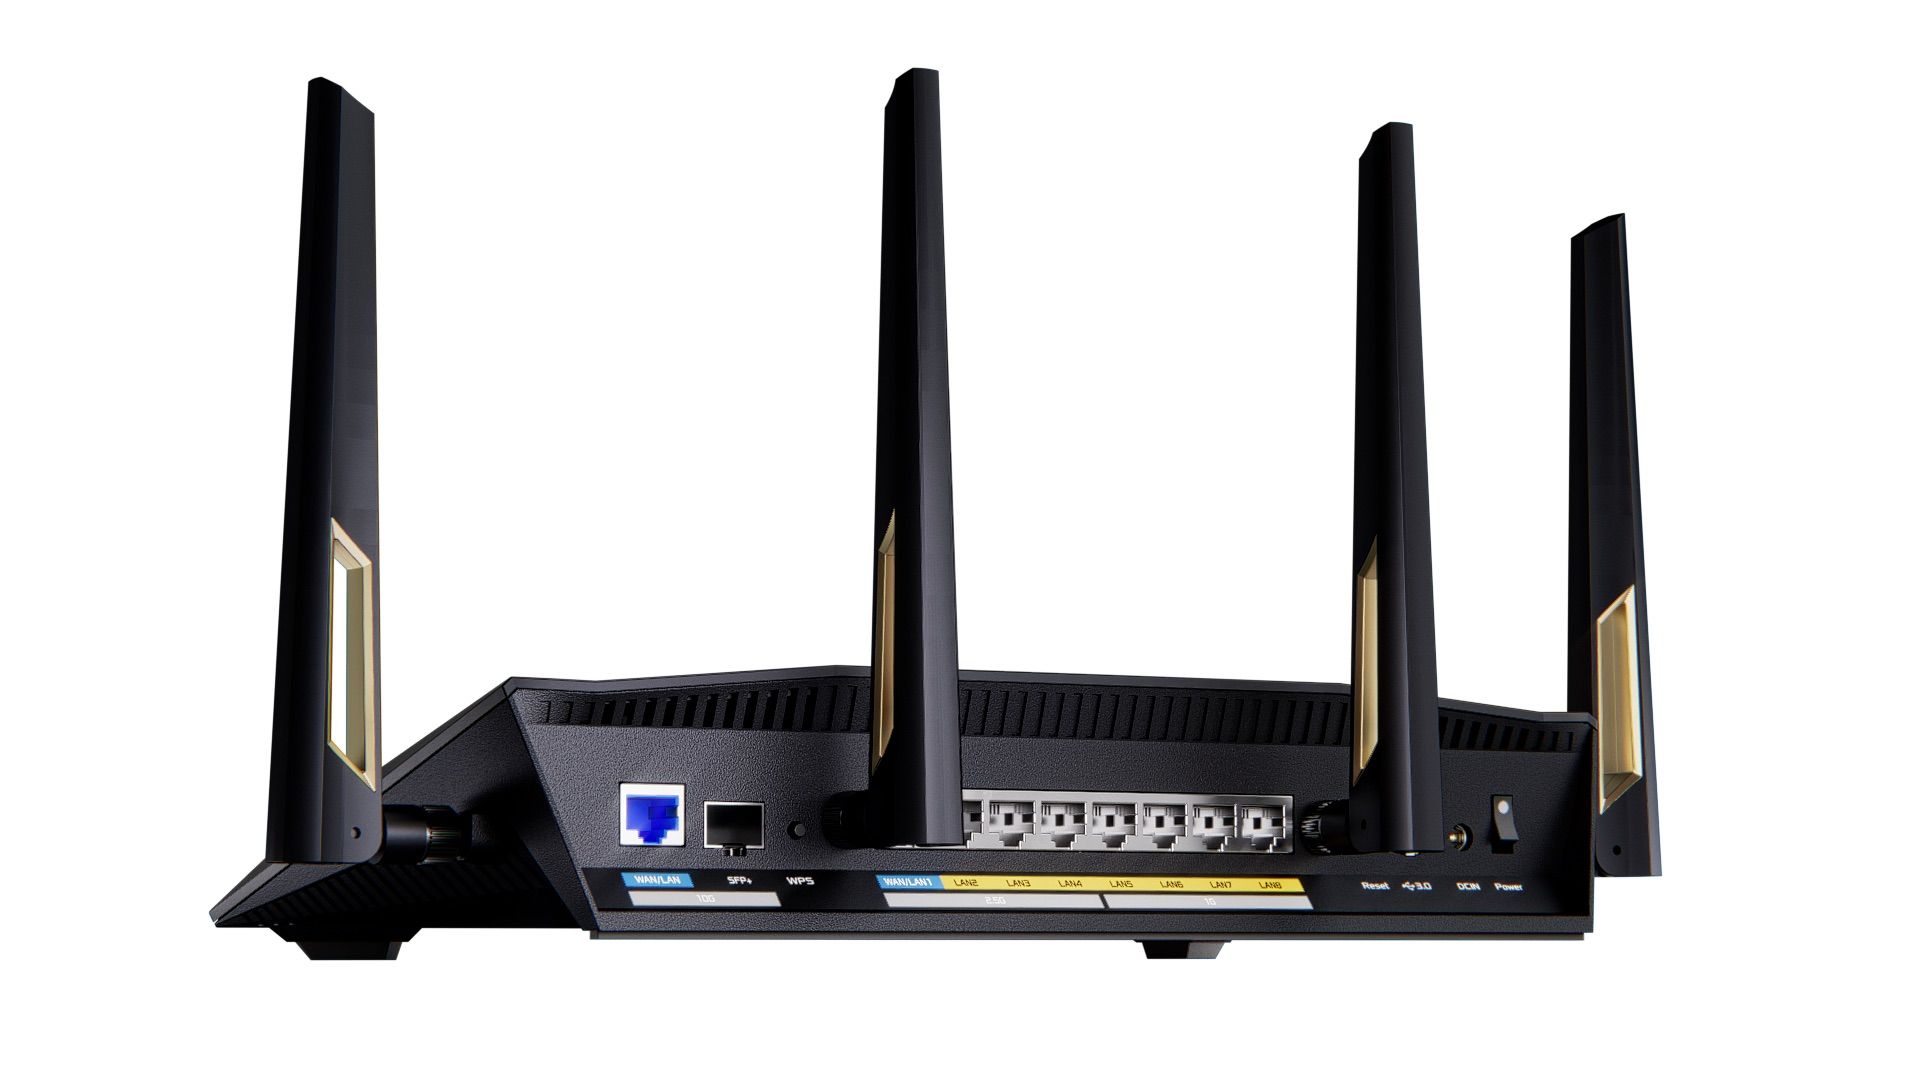 Black wireless router with four antennas.